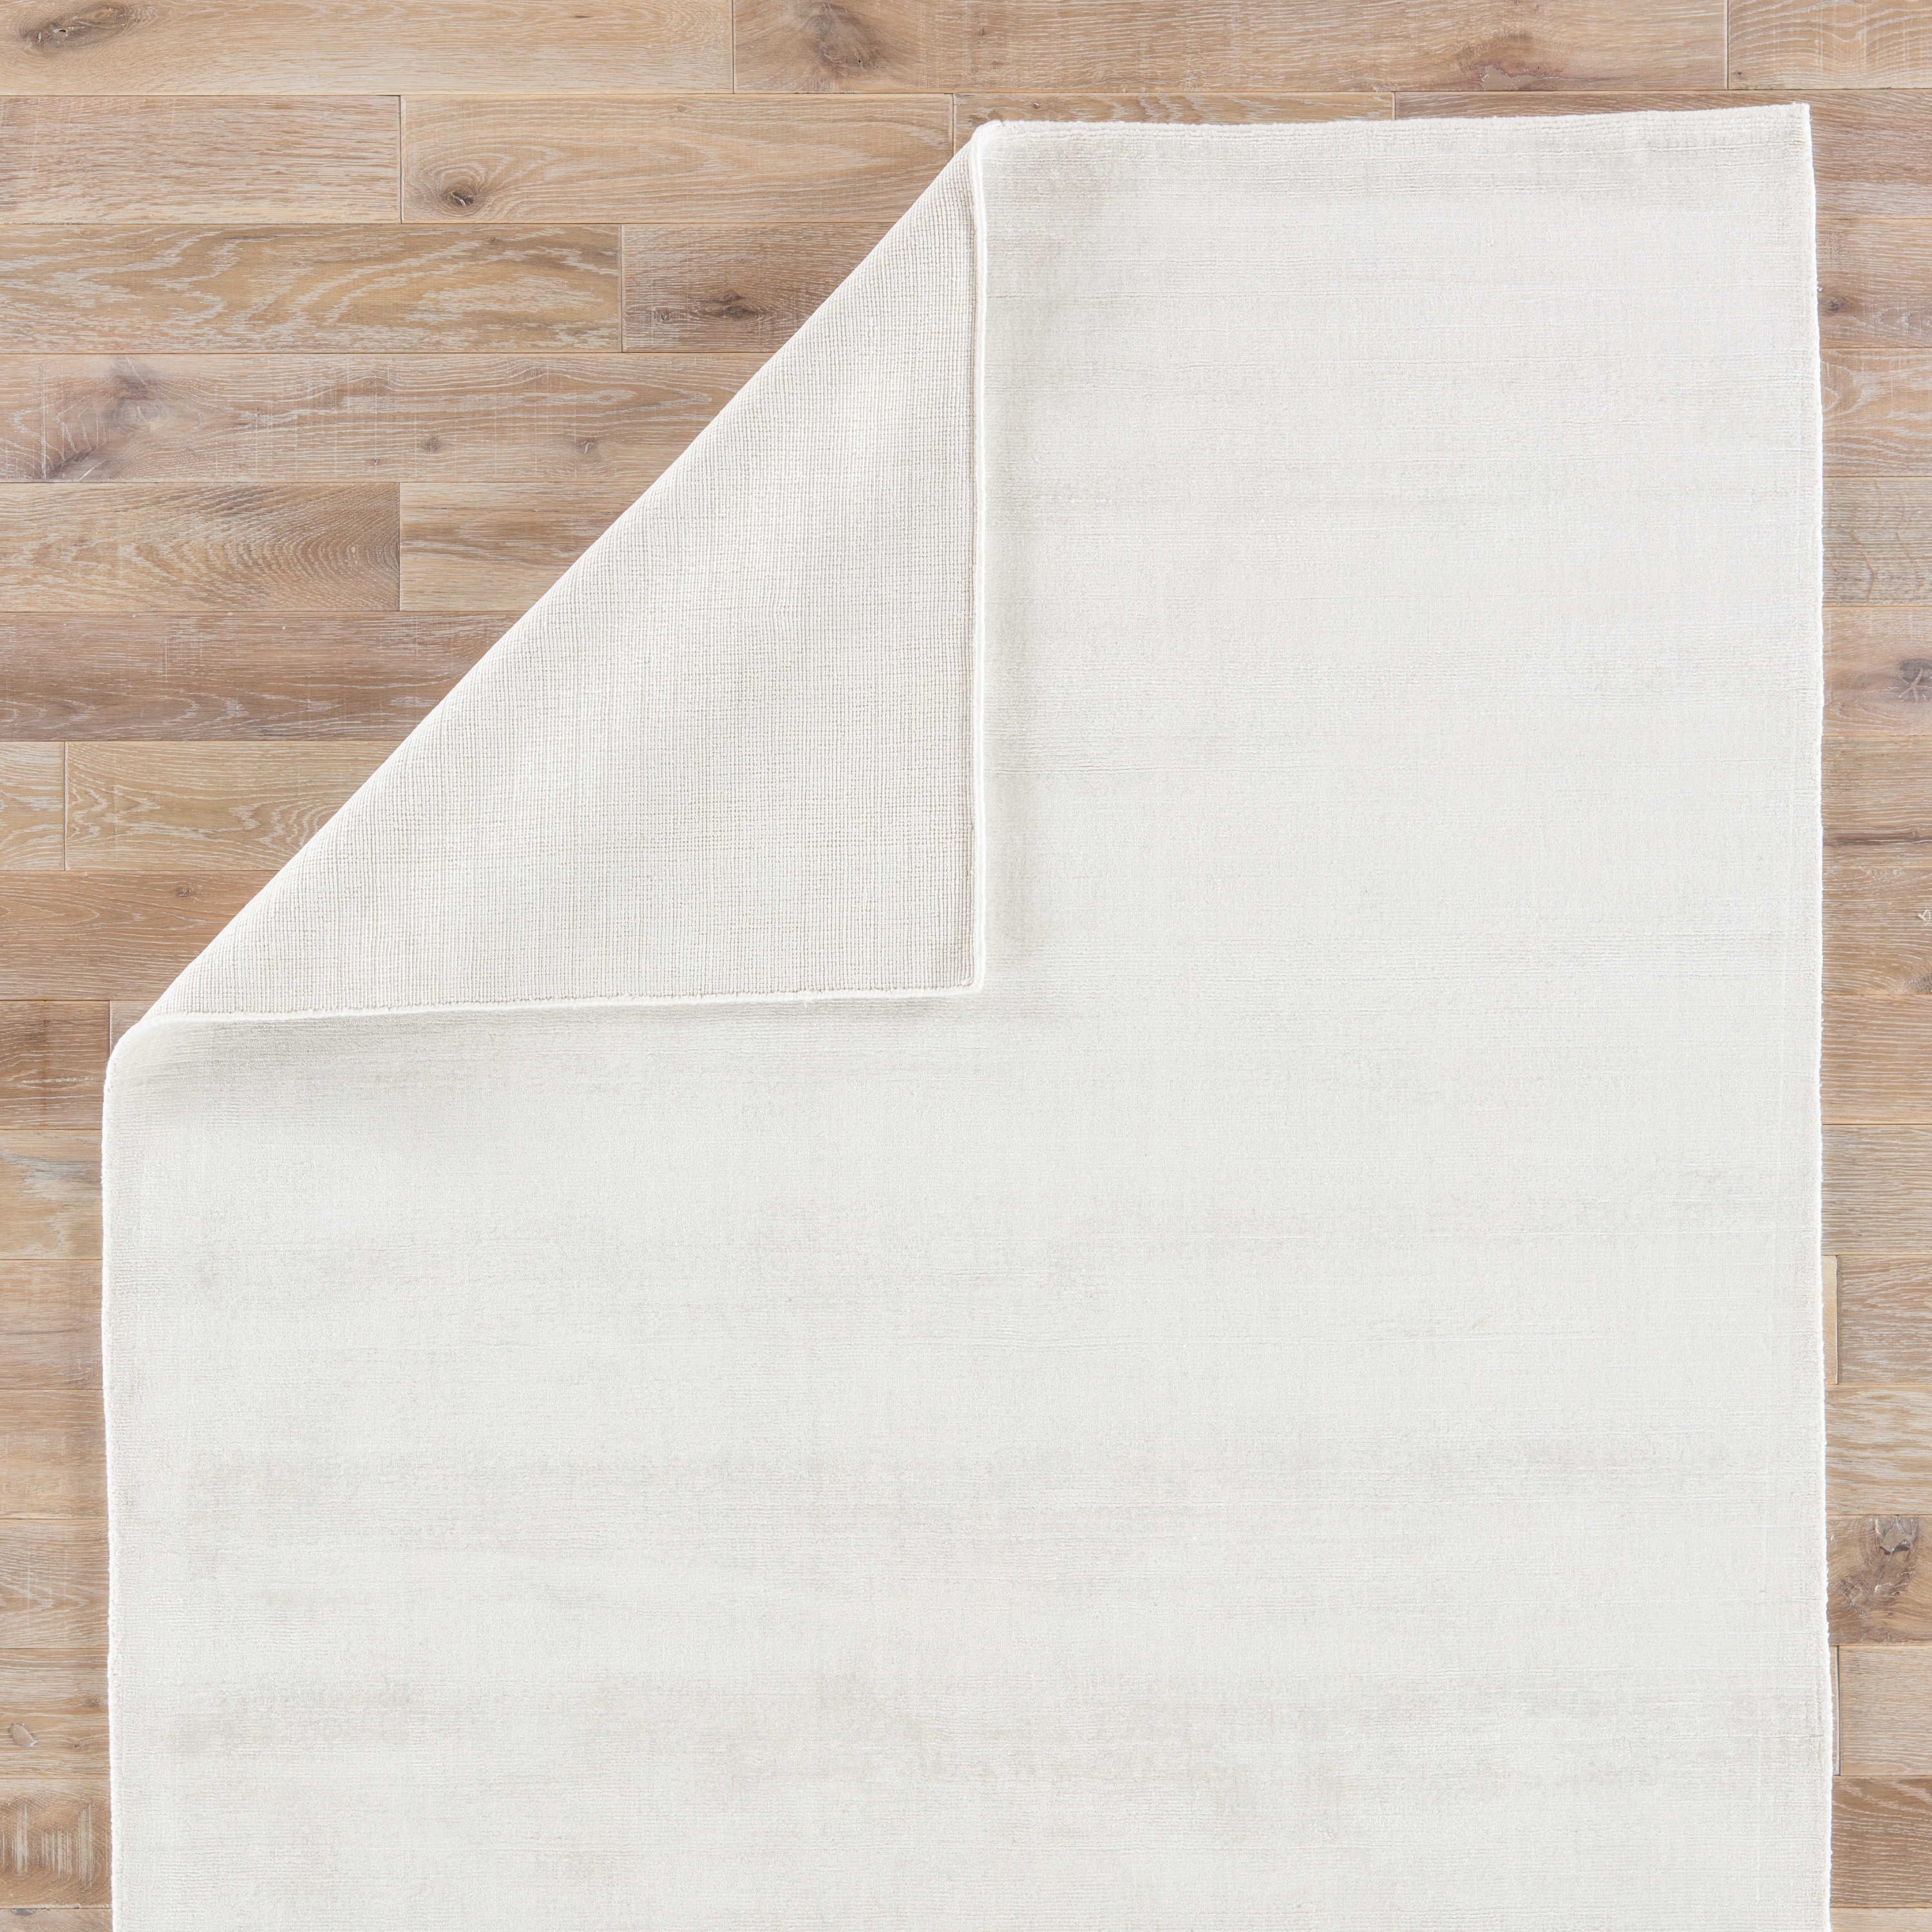 Yasmin Handloomed Area Rug, White, 8' x 10' - Image 2